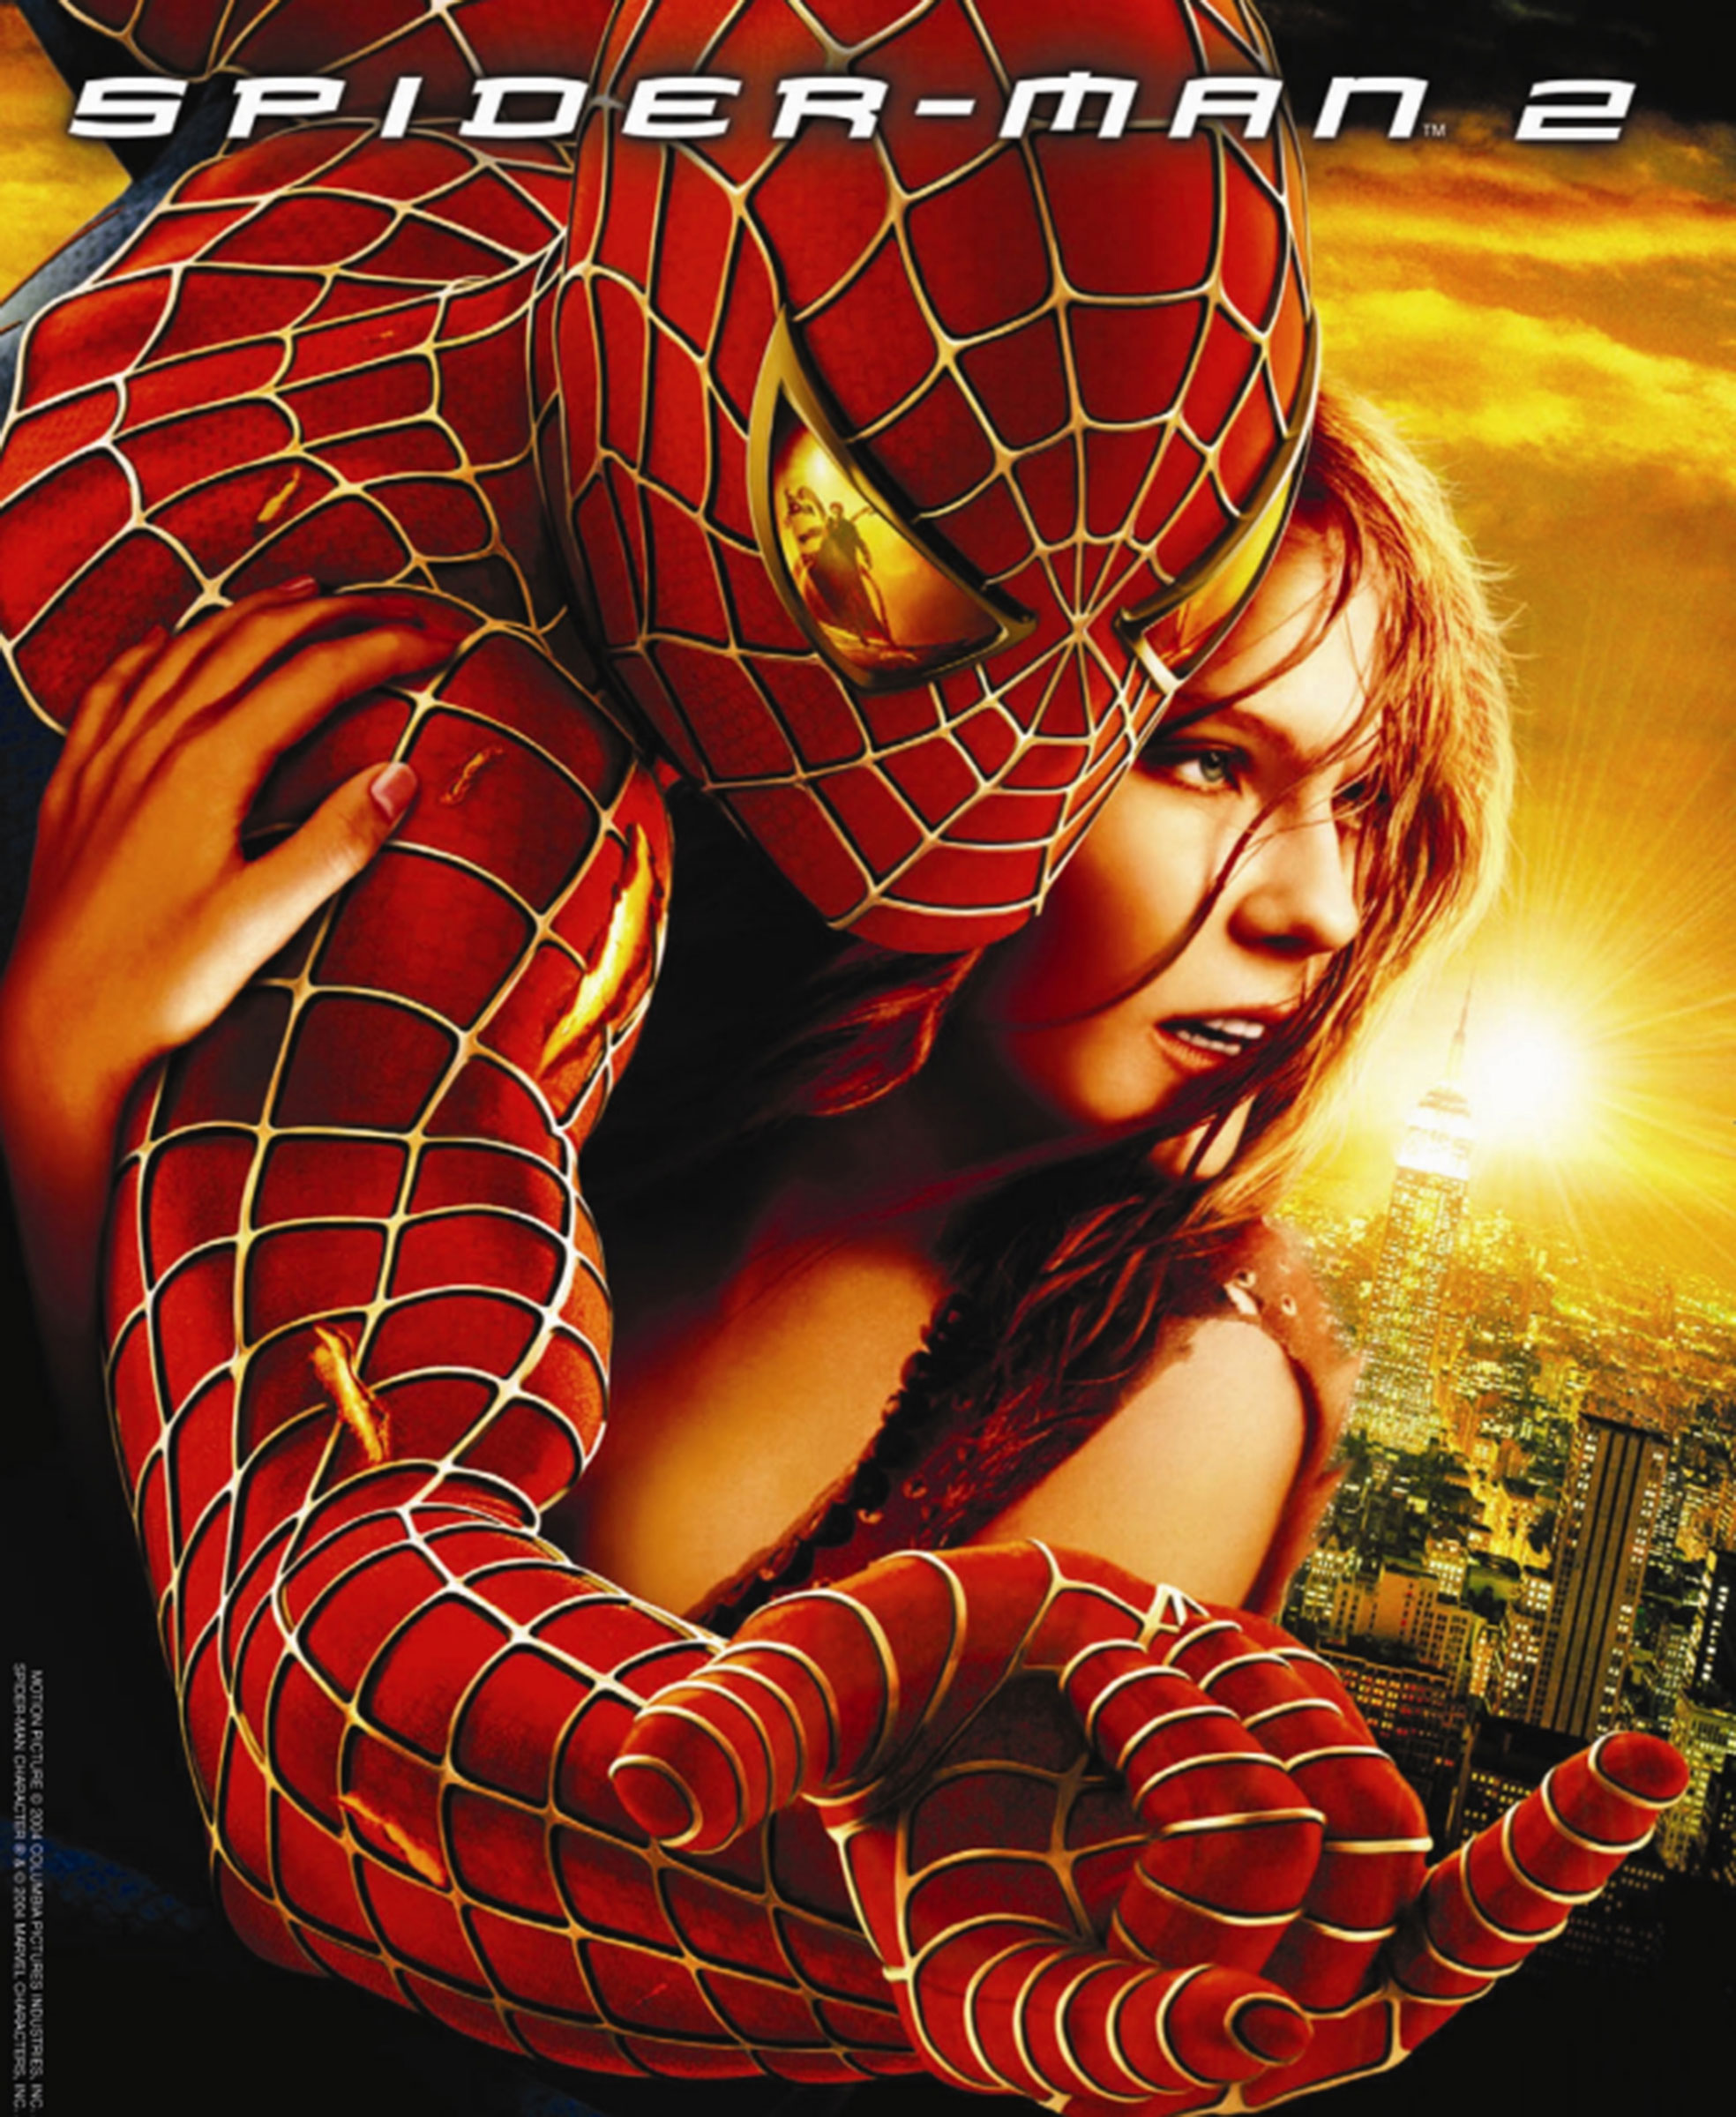 Spider-Man 2 (2004) ไอ้แมงมุม 2